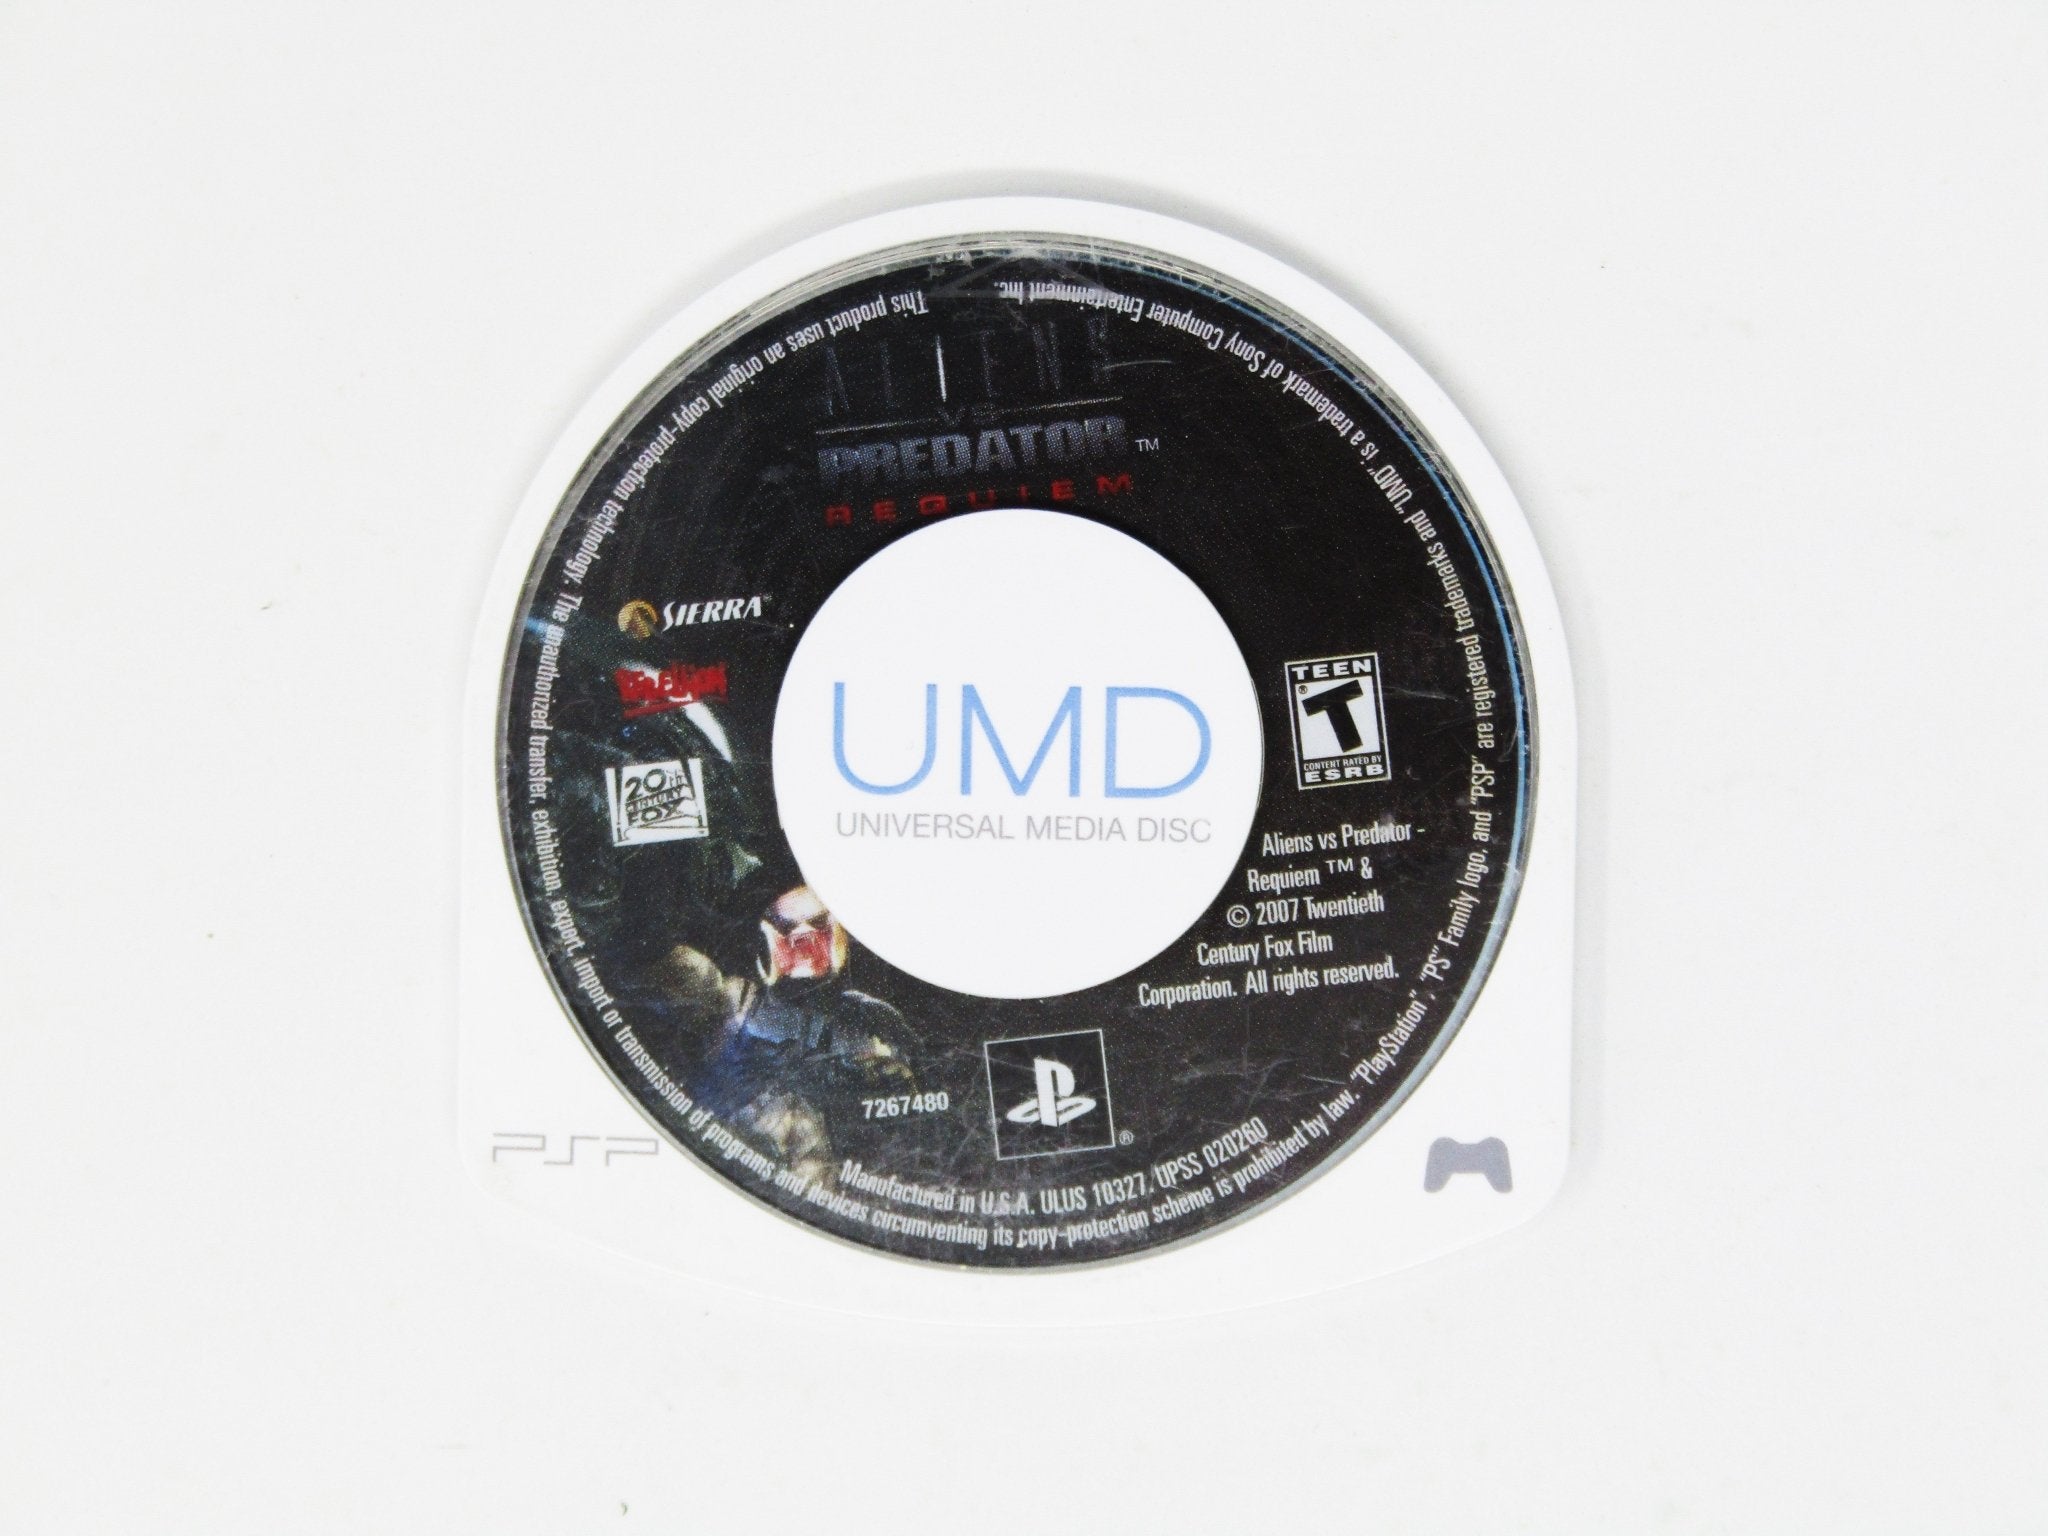 PSP Game ALIEN VS PREDATOR REQUIEM (R1, Factory Sealed) Playstation UMD AVP